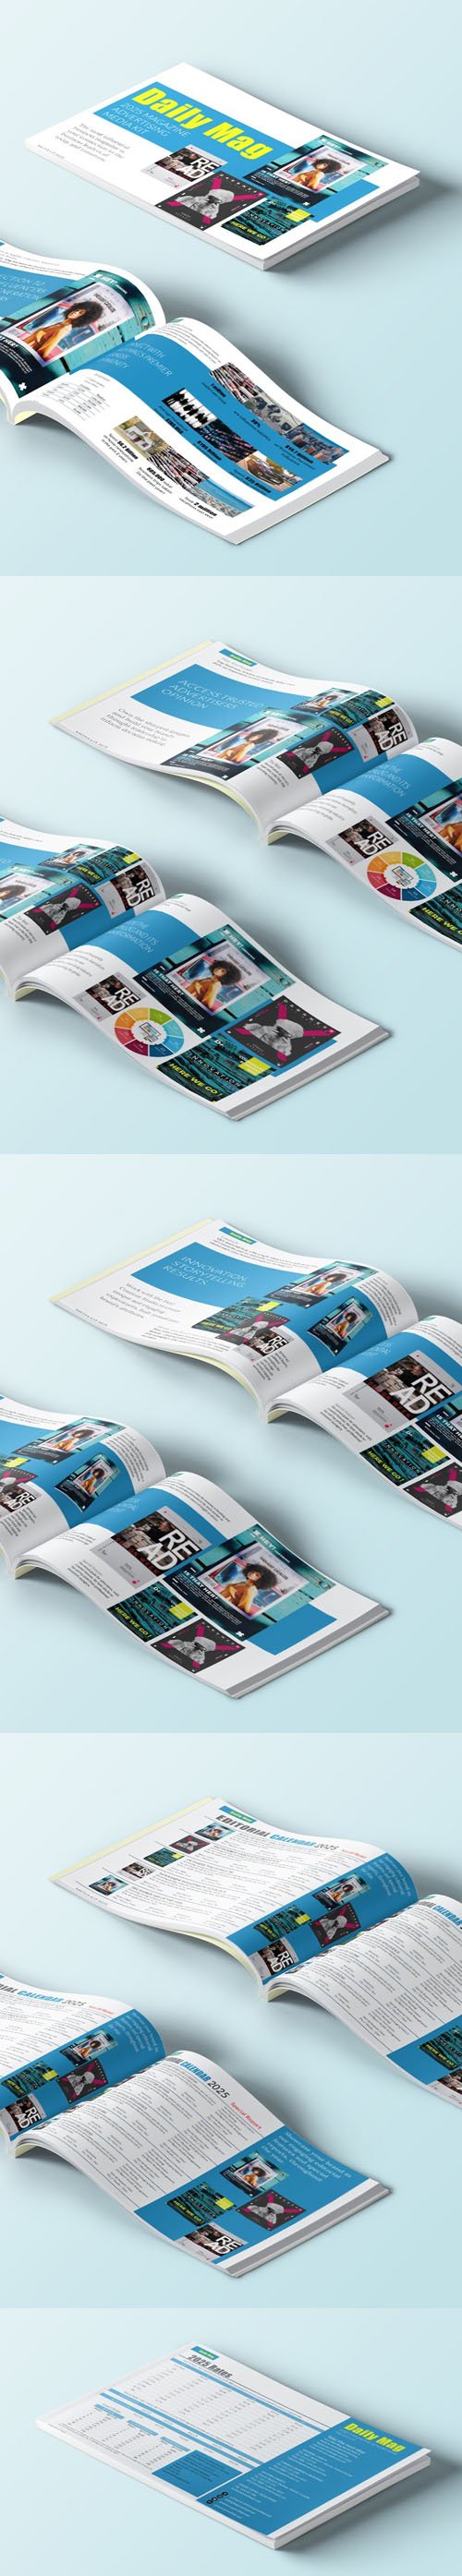 Magazine Advertising Media Kit Templates